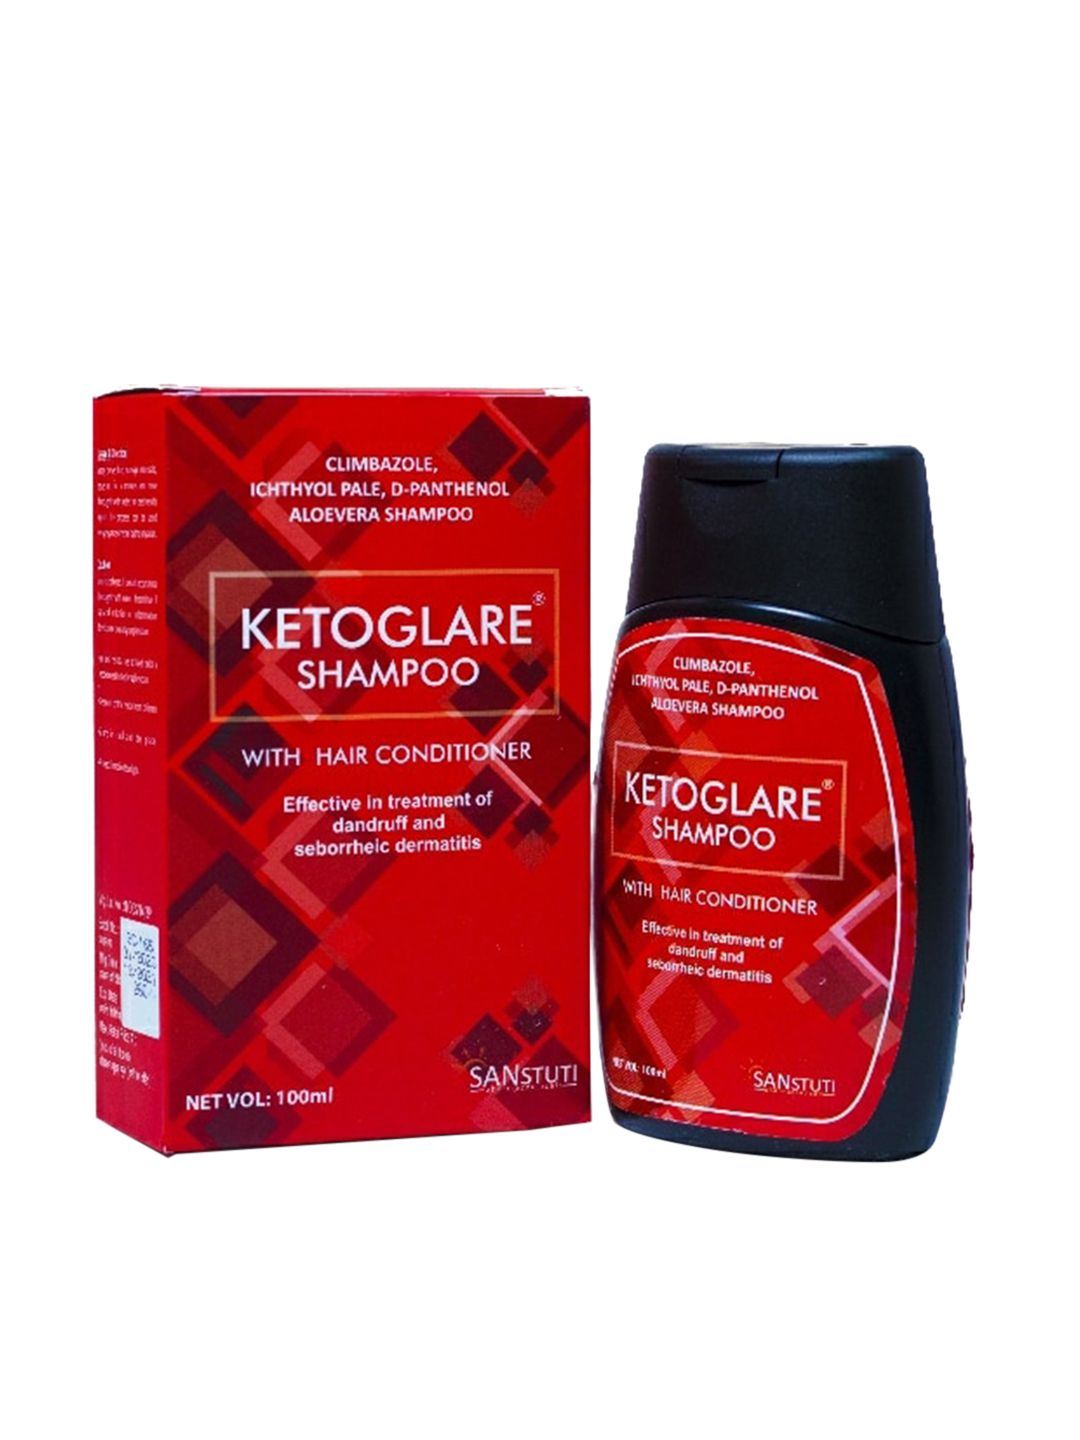 KETOGLARE White Shampoo 100ml Price in India